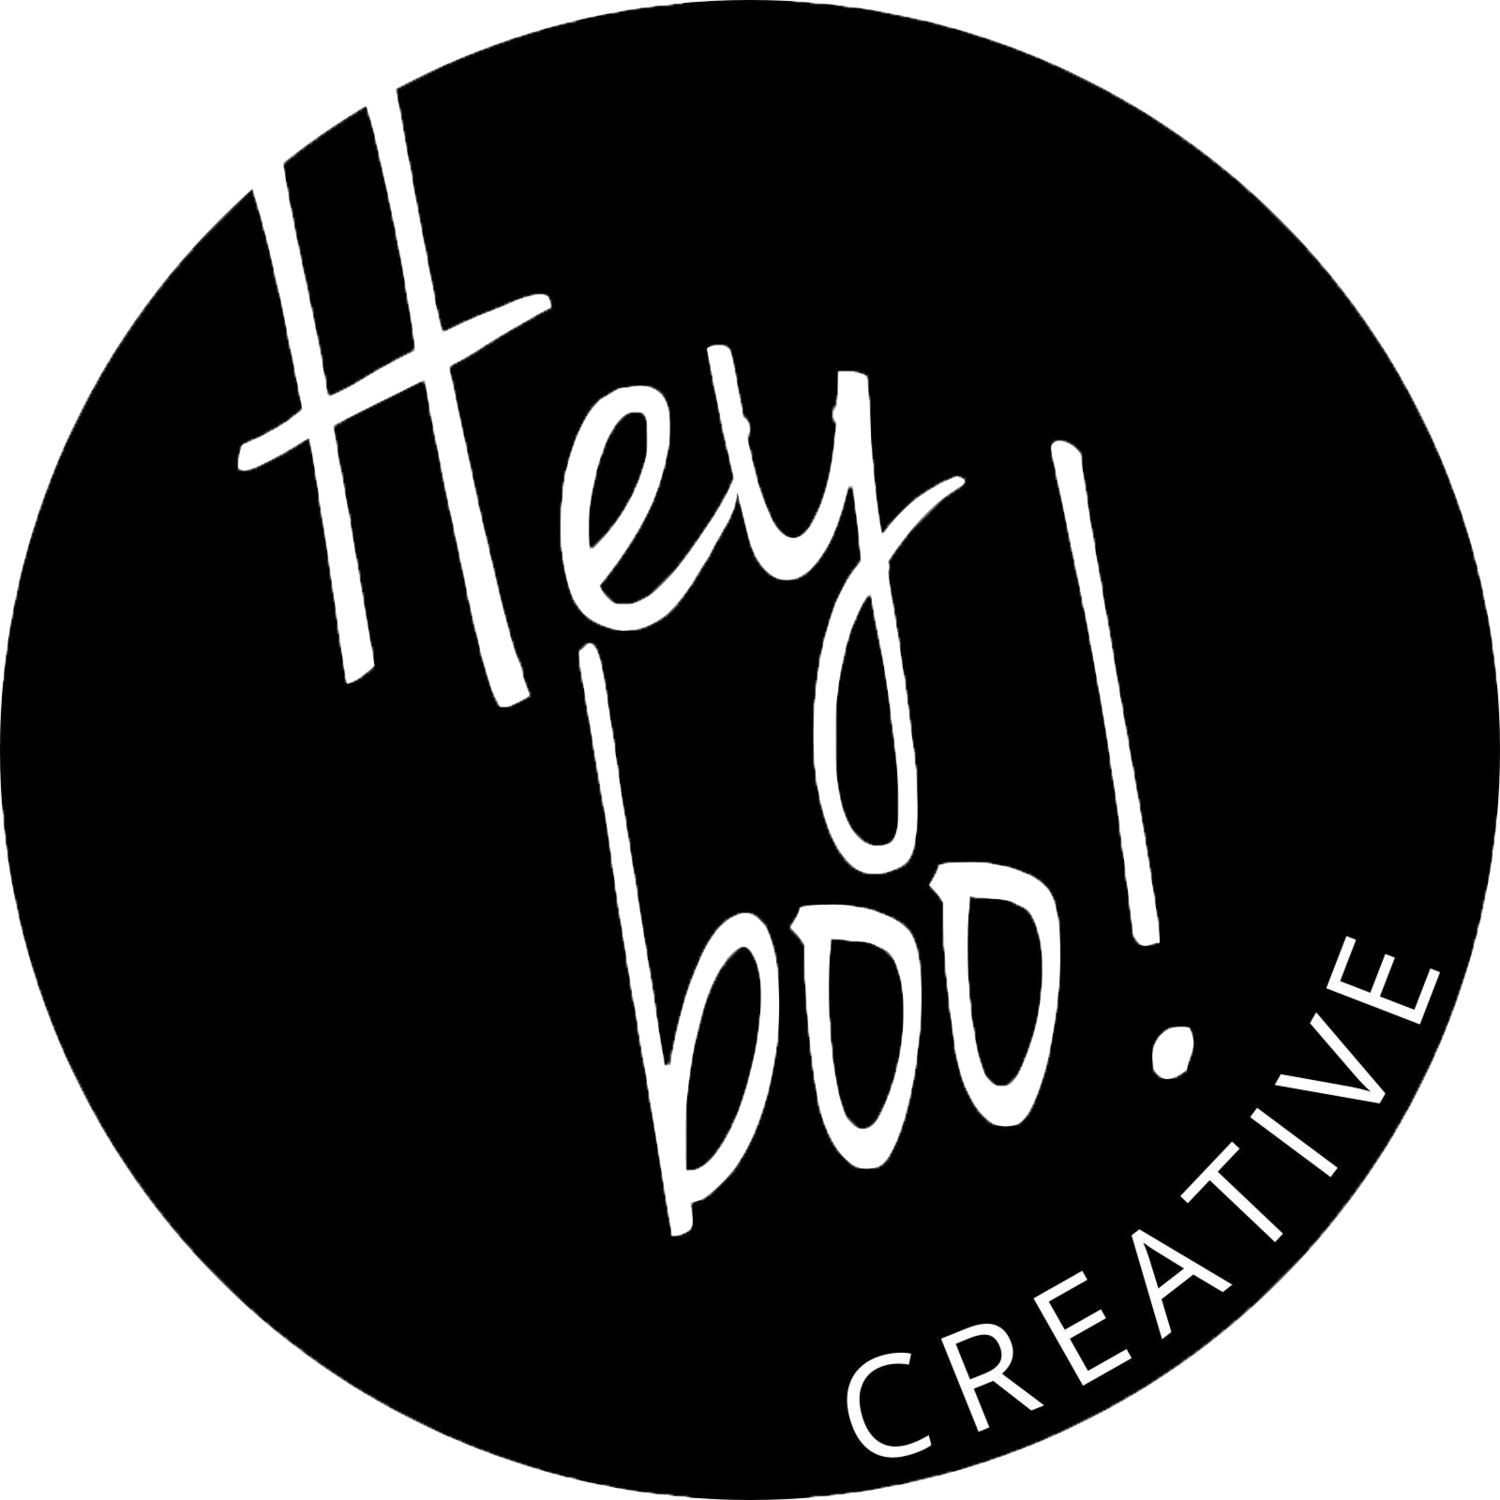 Hey Boo! Creative